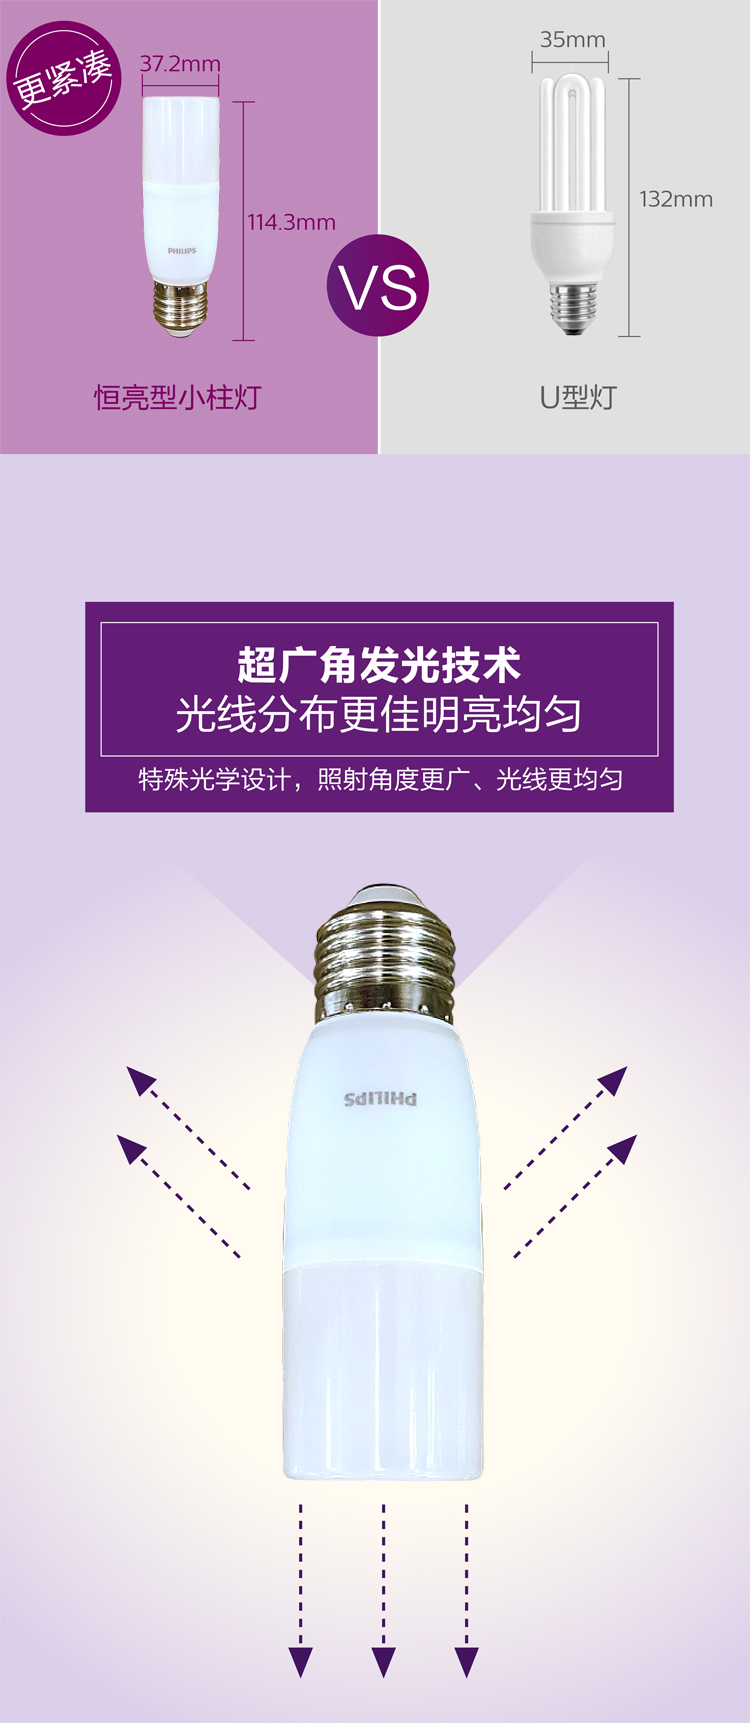 PHILIPS LED bulb Stick 9.5W E27 3000K 1CT/12 CN 929001901409